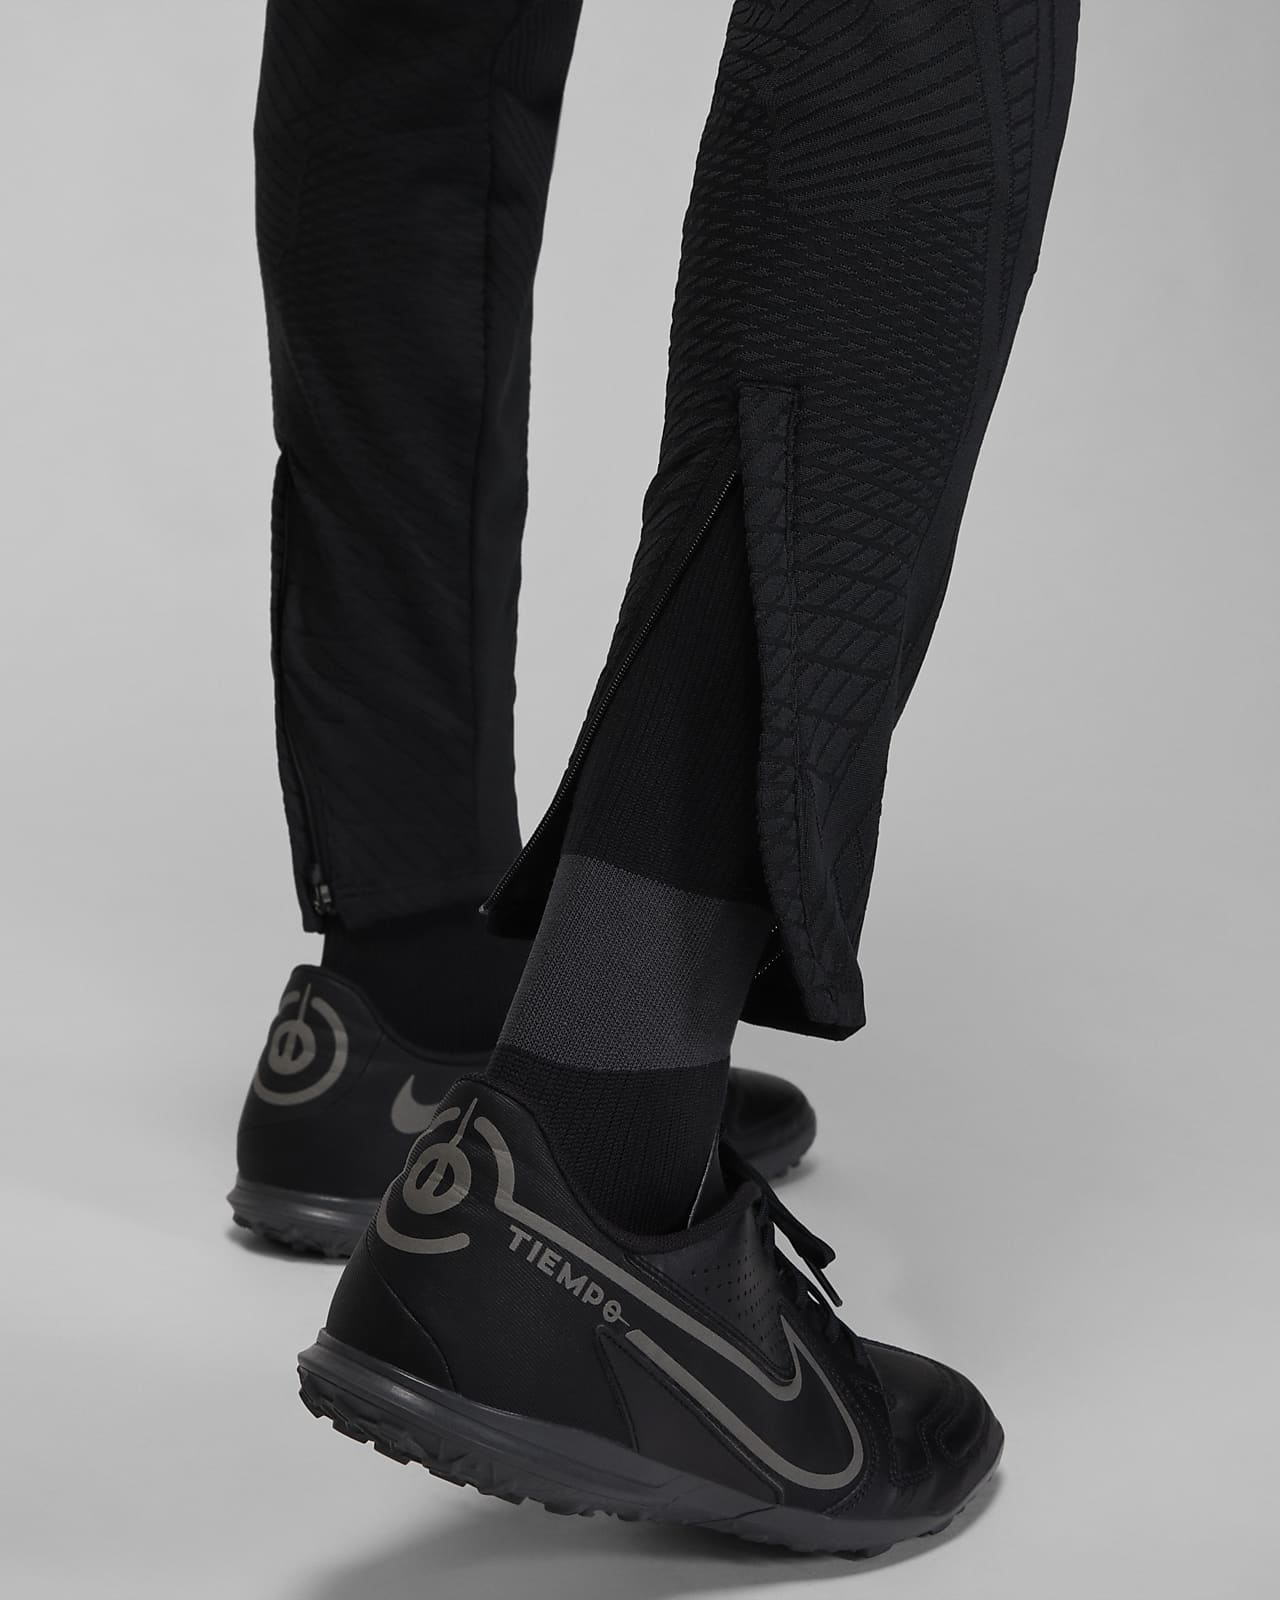 Pants Nike Dri-FIT Park 20 Knit   - Football boots & equipment